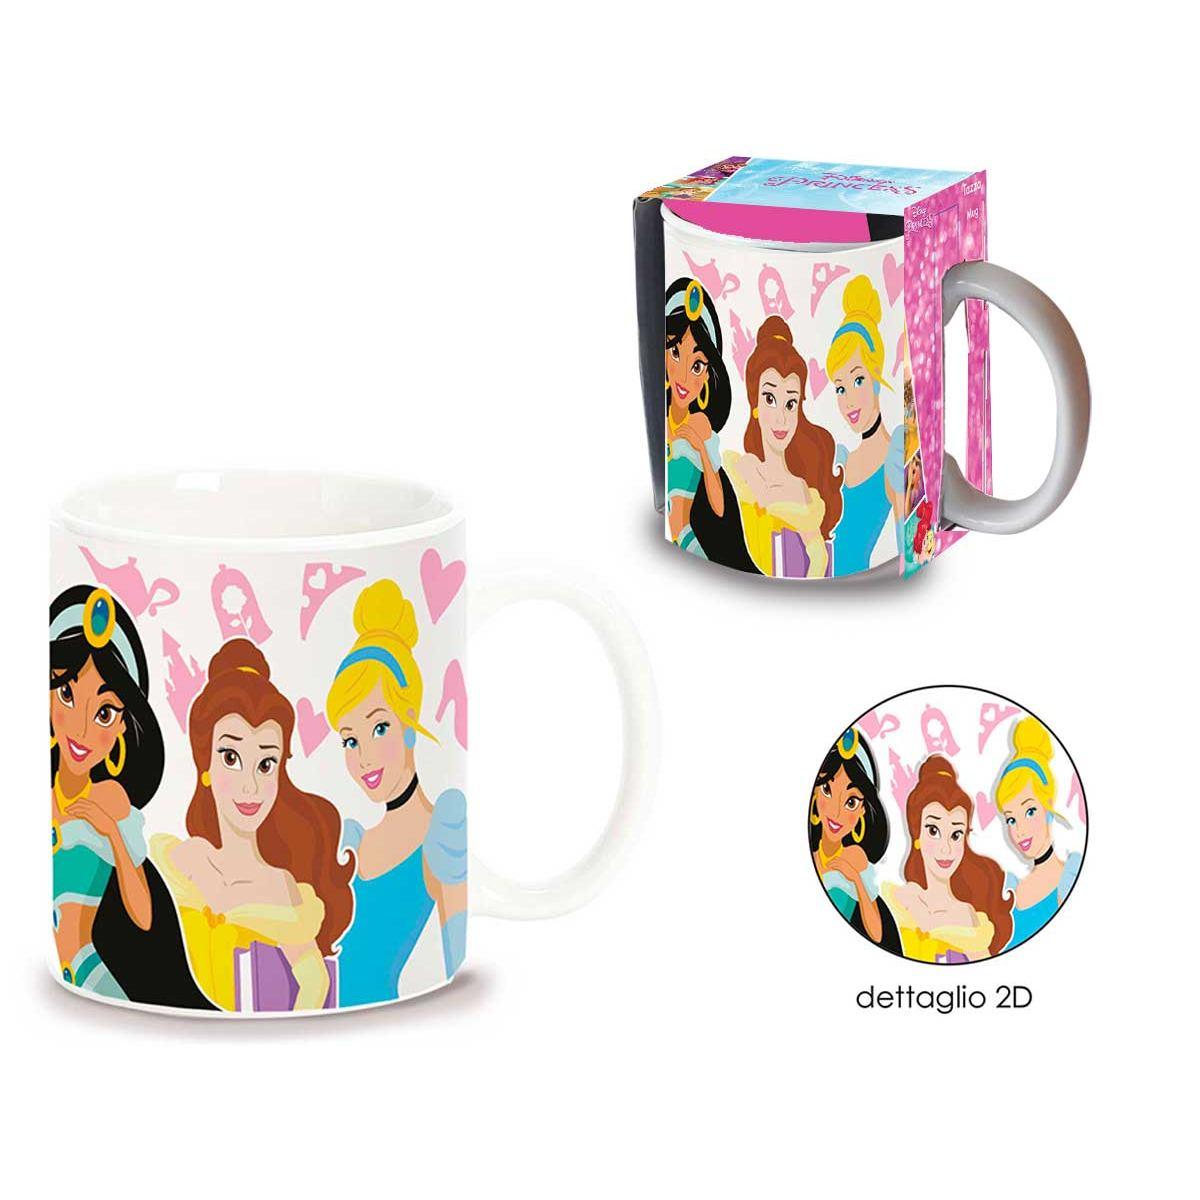 Gift home tazza big mug 2d princess